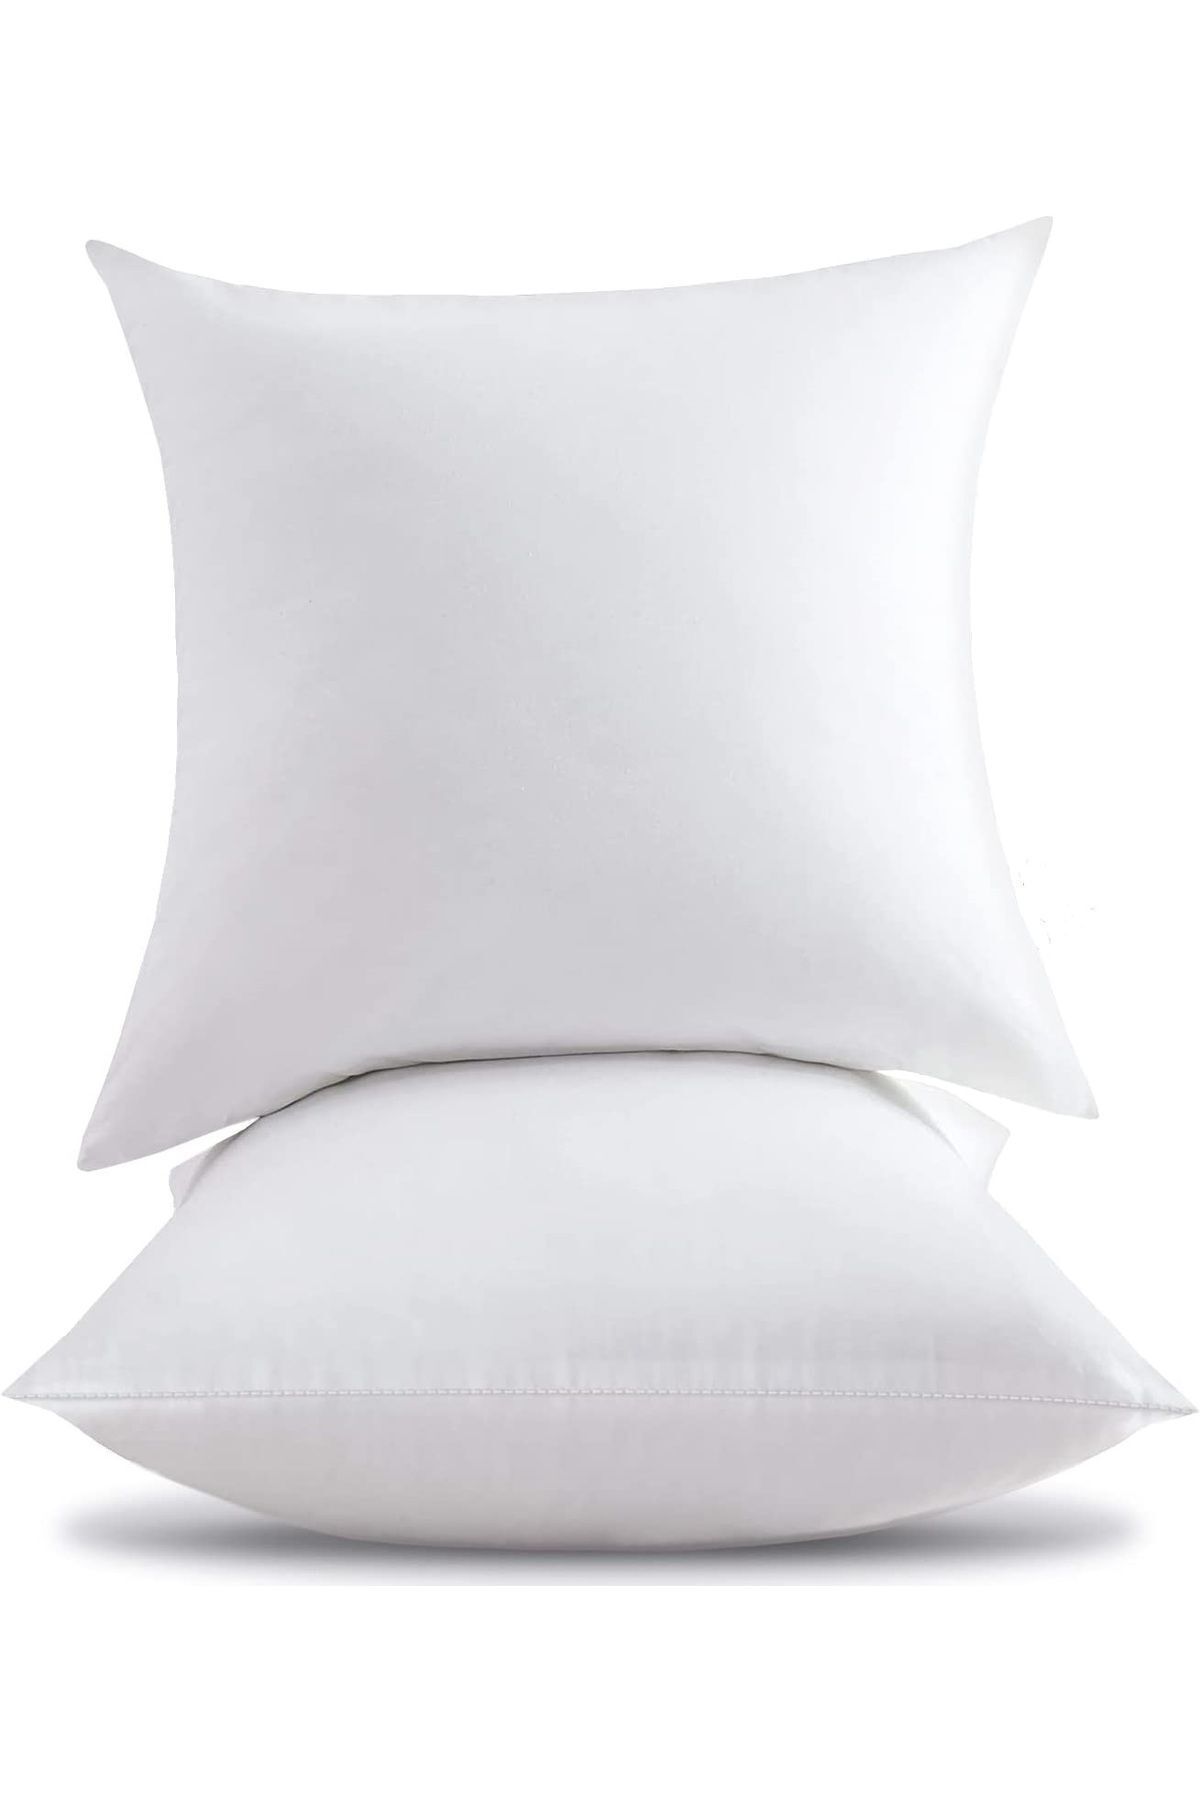 İz Concept Premium 2li Set 43x43 Kırlent İç Yastığı Saf Silikon Dolgulu 375gr Premium Quality Pillow